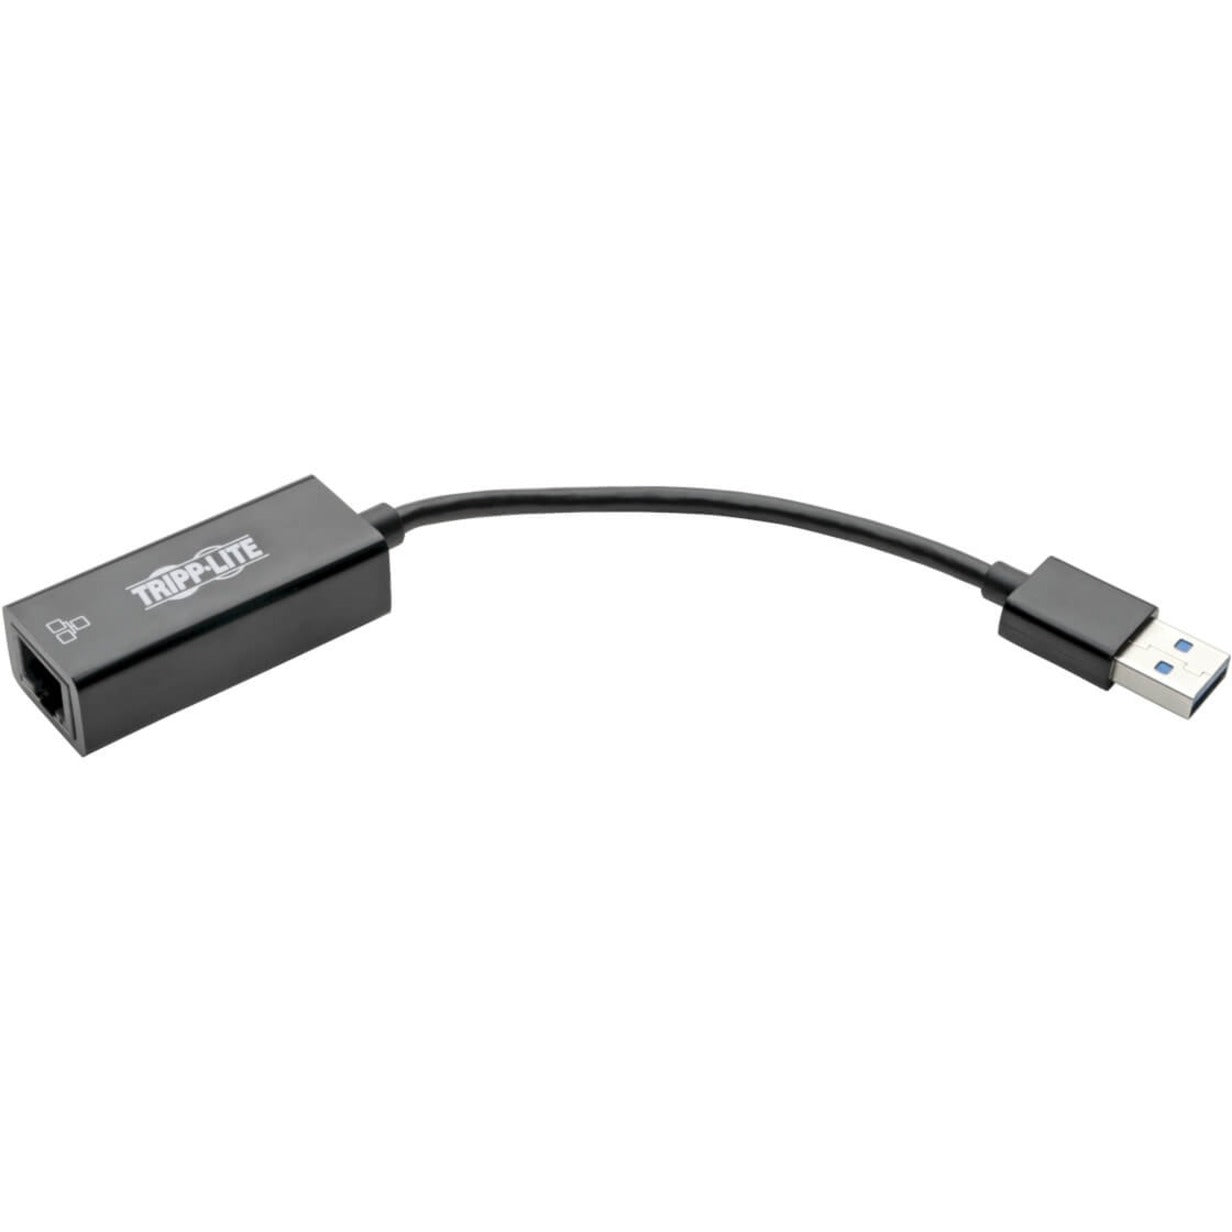 Tripp Lite U336-000-R USB 3.0 to Gigabit Ethernet Adapter, 10/100/1000, 3 Year Warranty